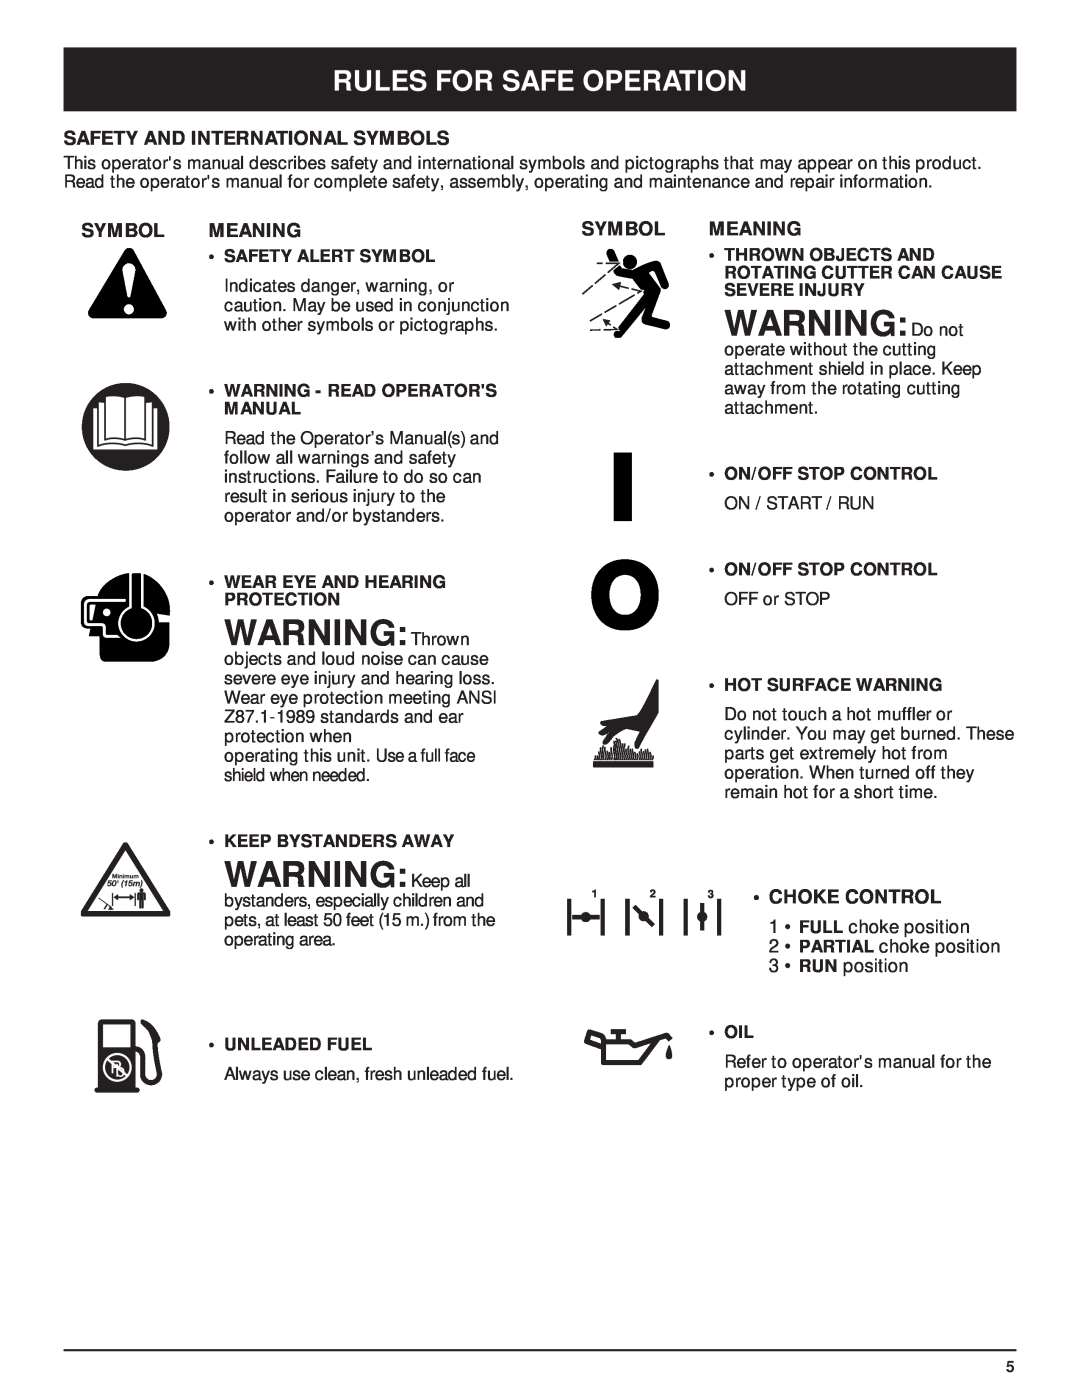 MTD MT700 manual WARNING Thrown, WARNING Keep all, WARNING Do not, Safety And International Symbols, Symbol Meaning 